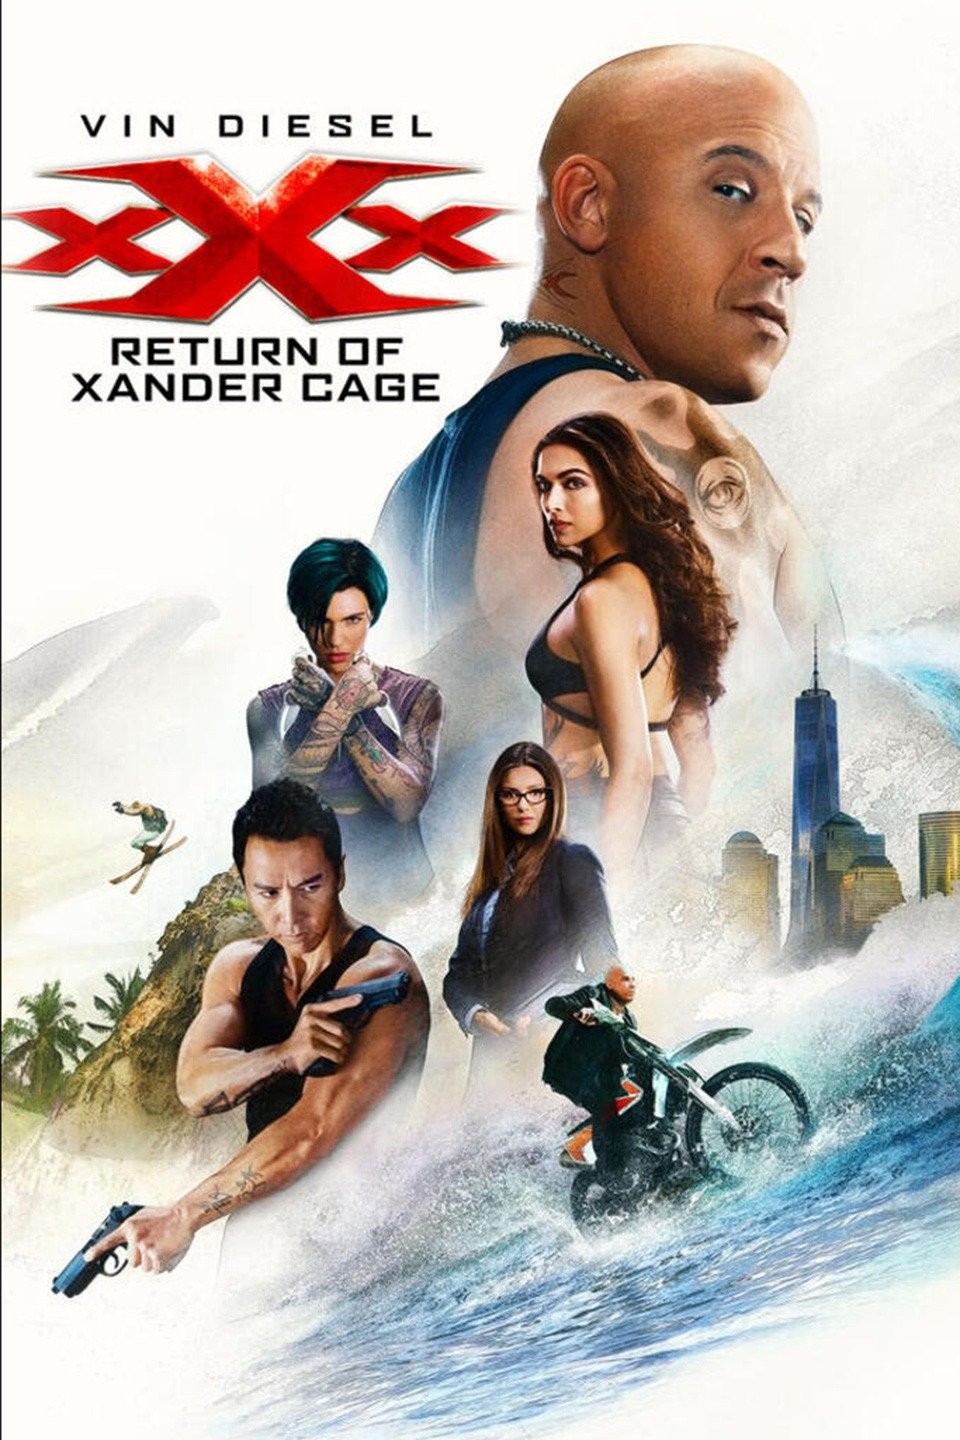 Viqxxx - xXx: Return of Xander Cage - Rotten Tomatoes